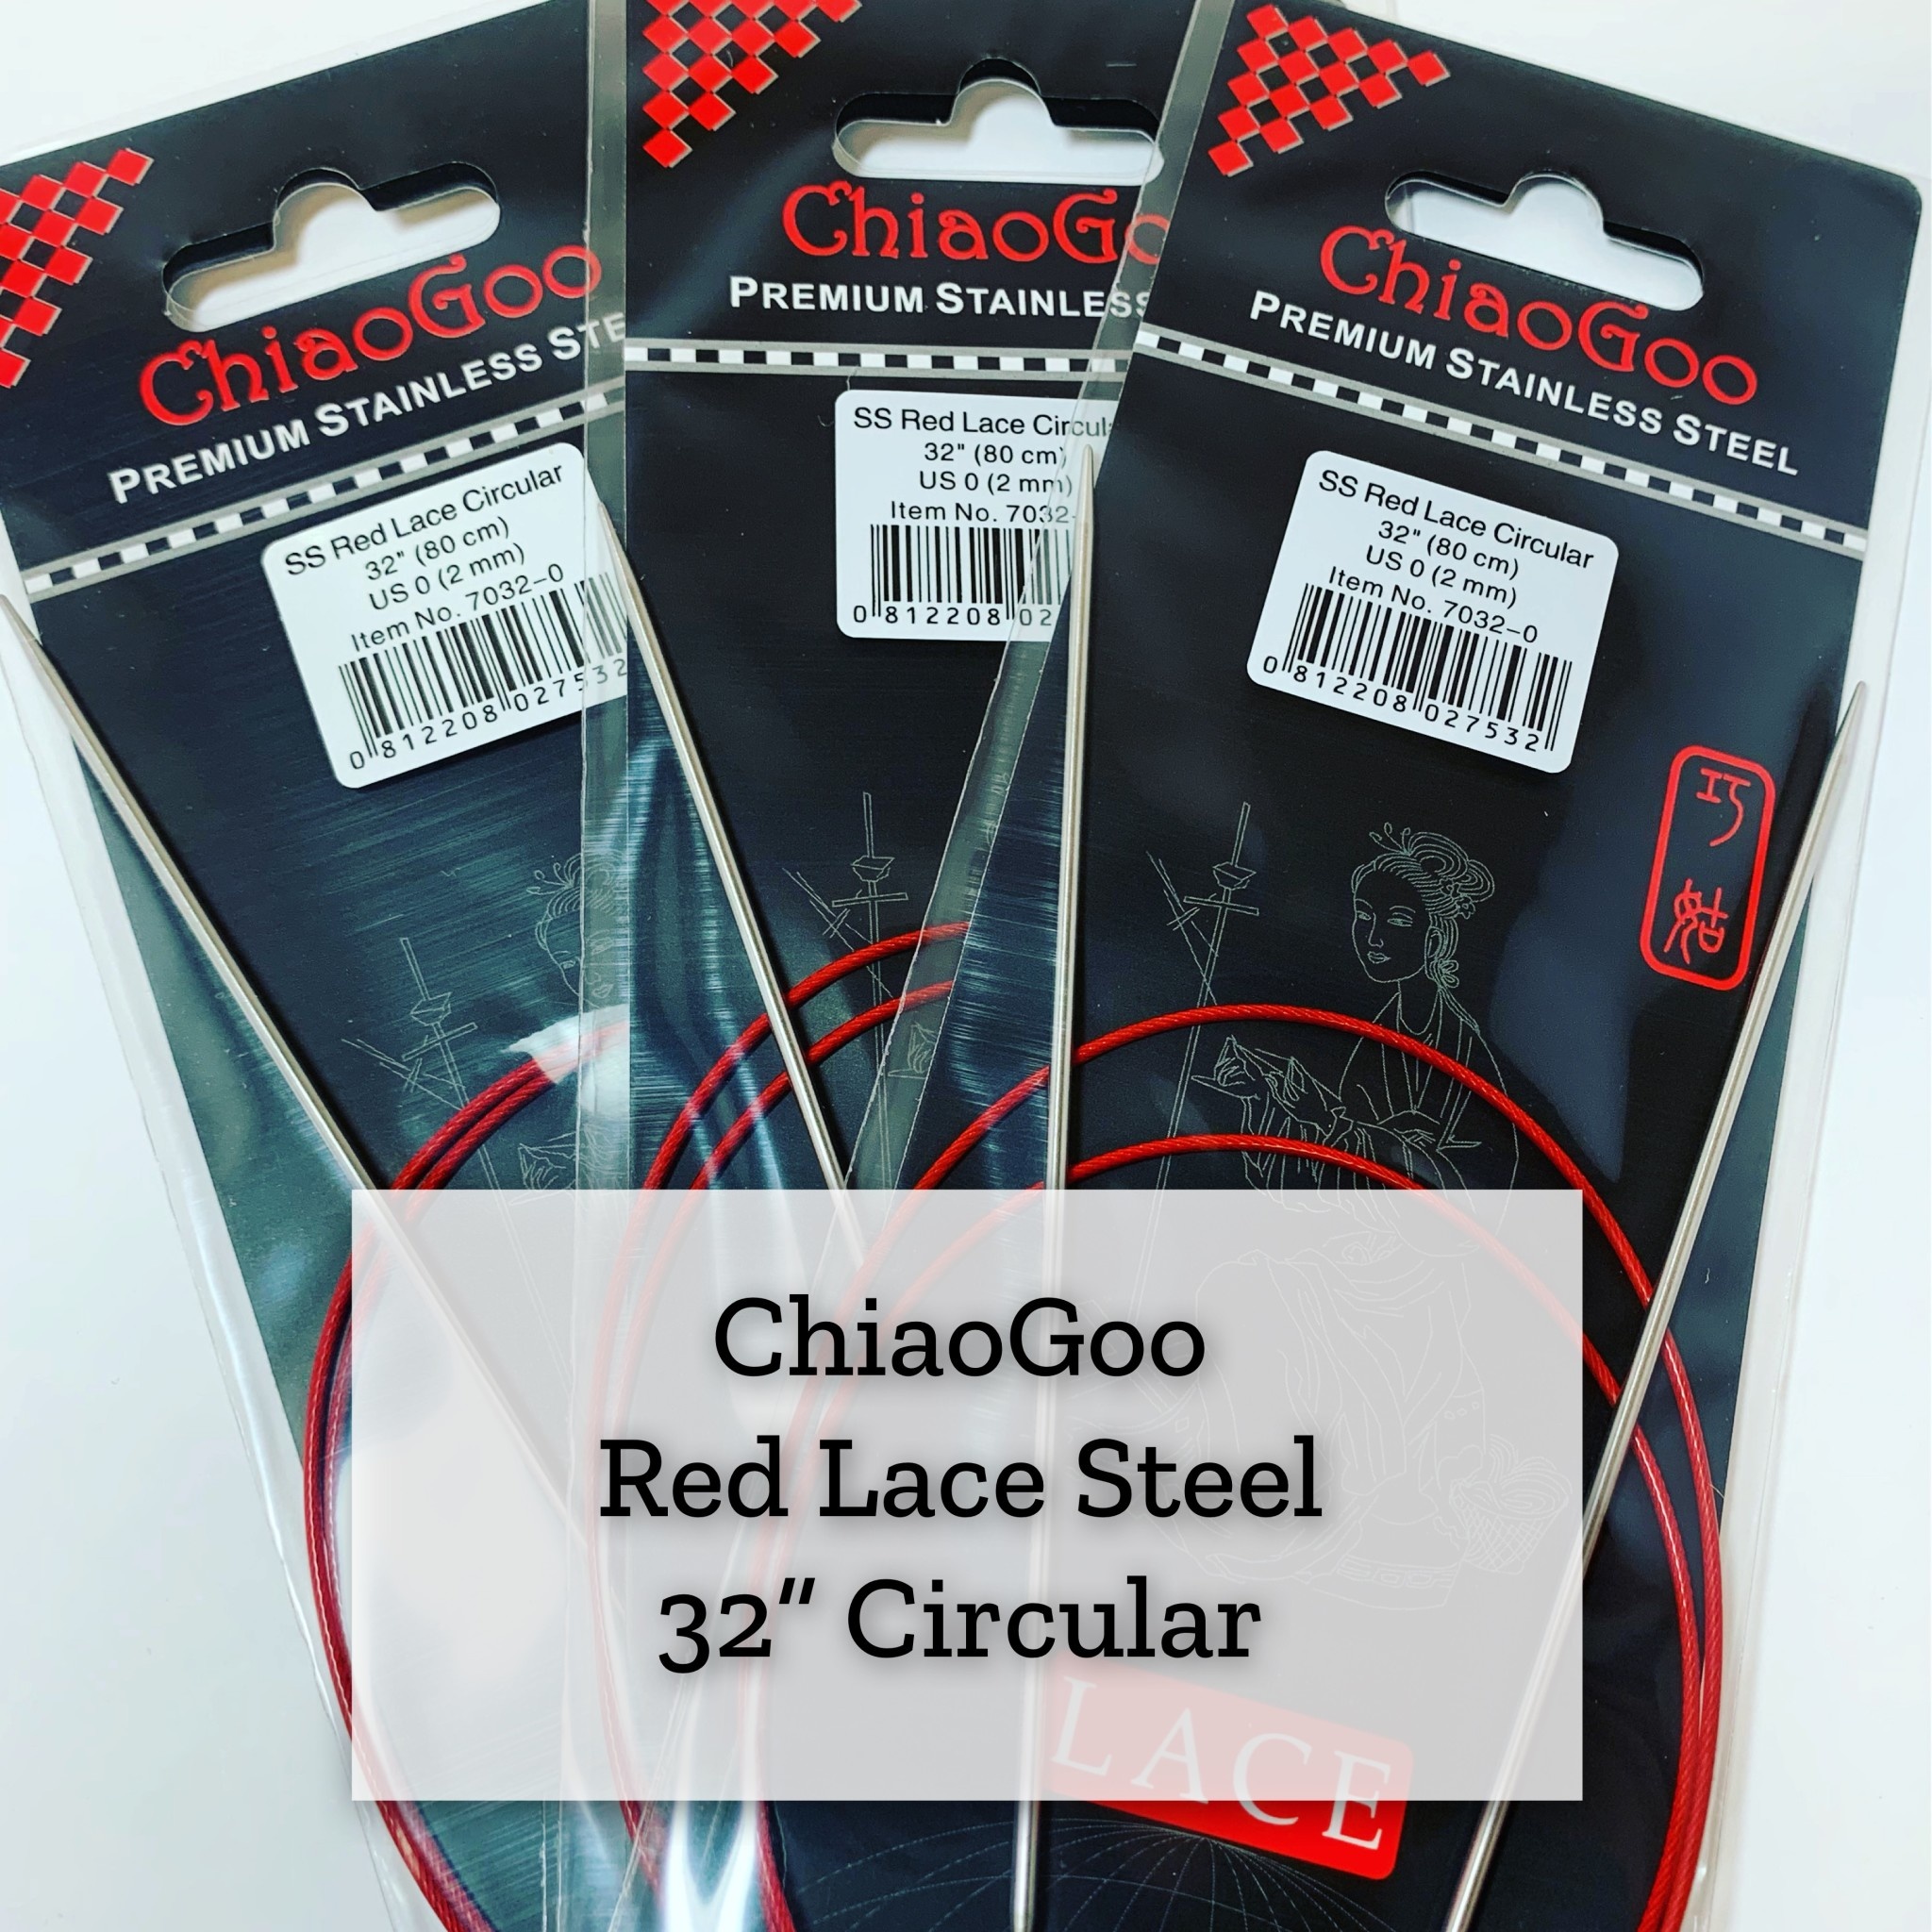 ChiaoGoo Red Lace Steel - 32" 3.5 mm